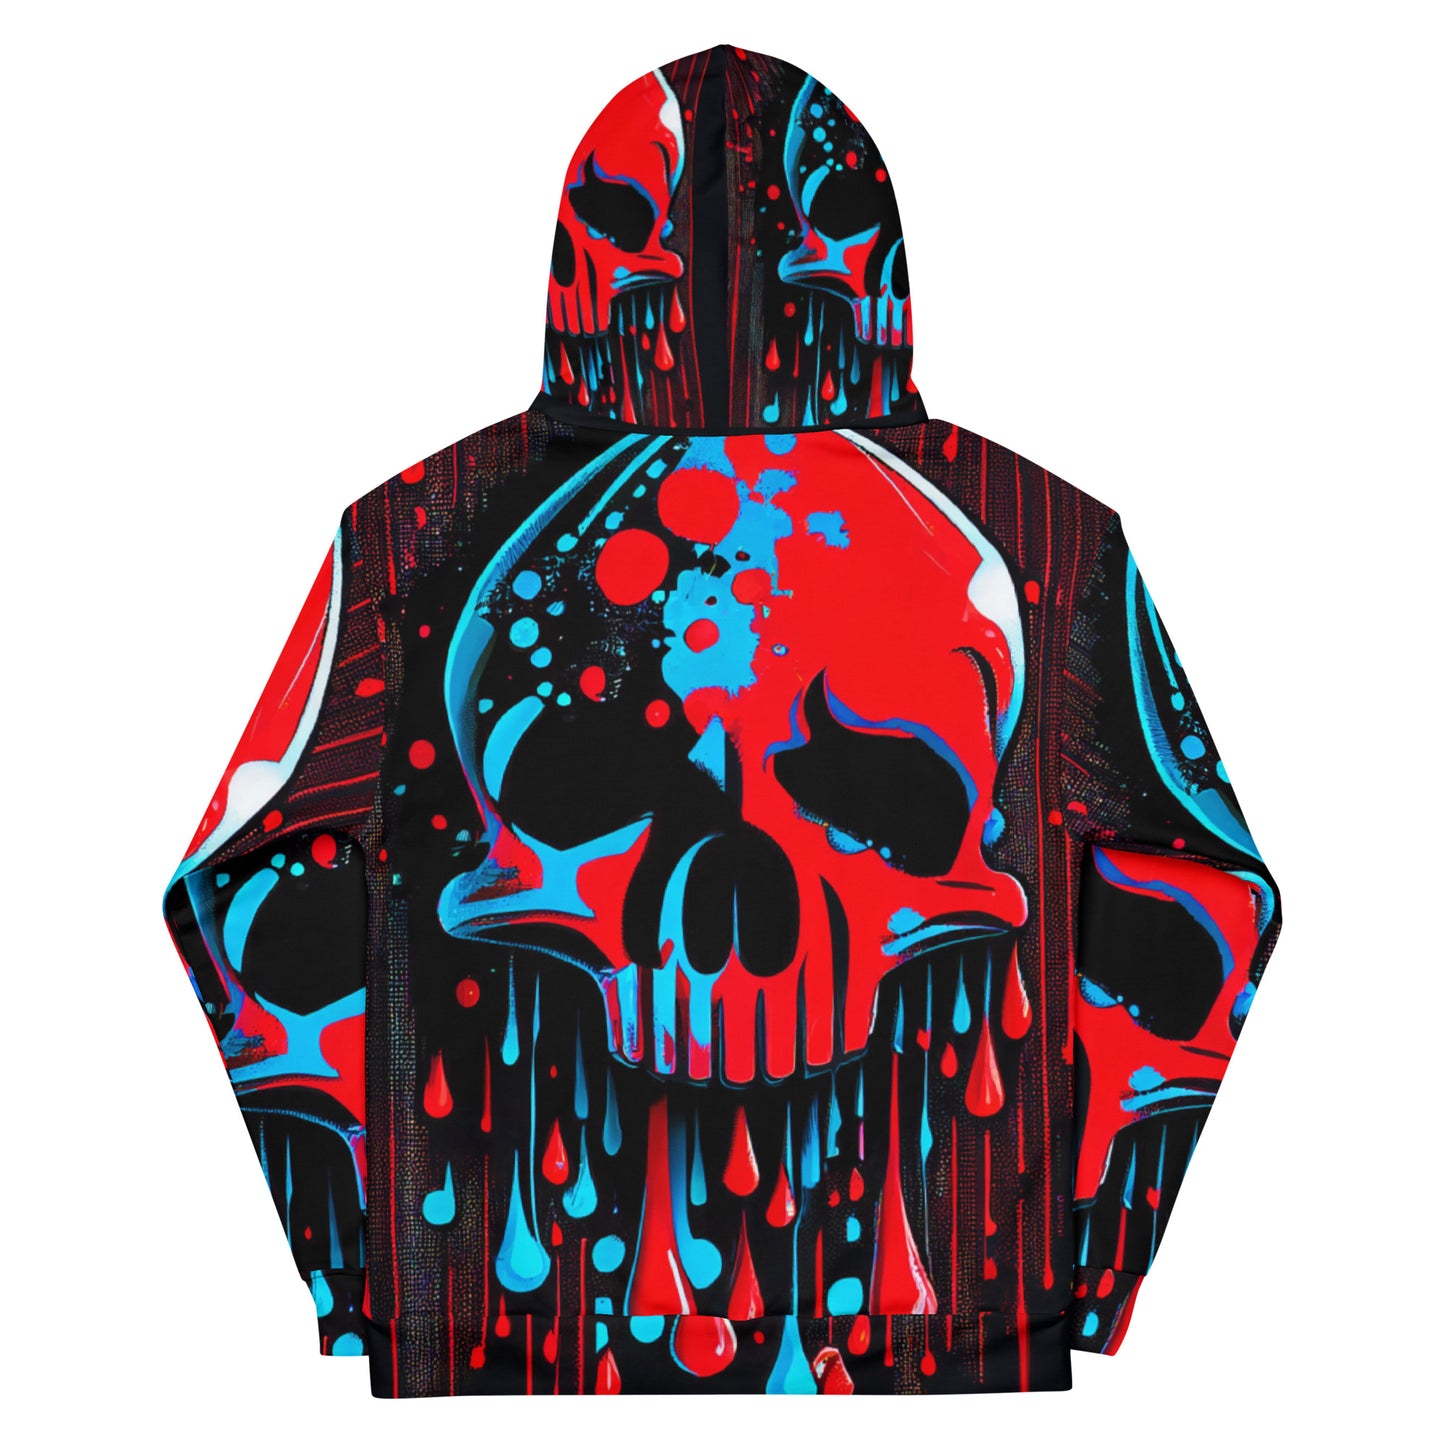 Acid Skull 02 Pop Art Unisex Trip Hoodie  Skate Wear / Club Wear / DJ.ungle Fever